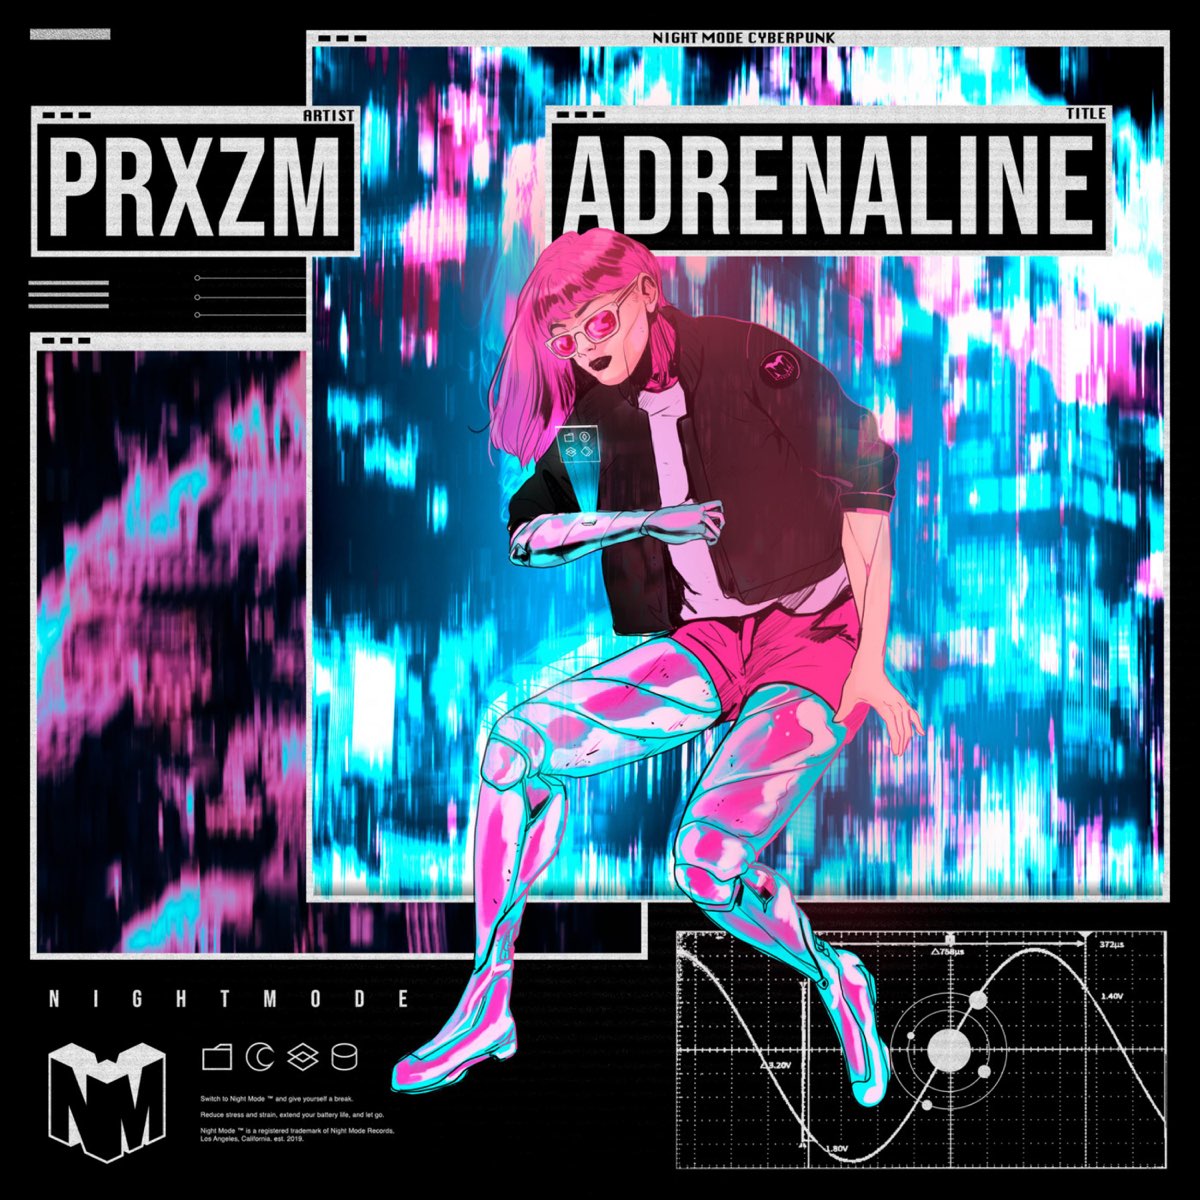 PRXZM. Adrenaline album. Adrenalin shadxwbxrn обложка. Solar Adrenaline Lyrics. Адреналин ночь